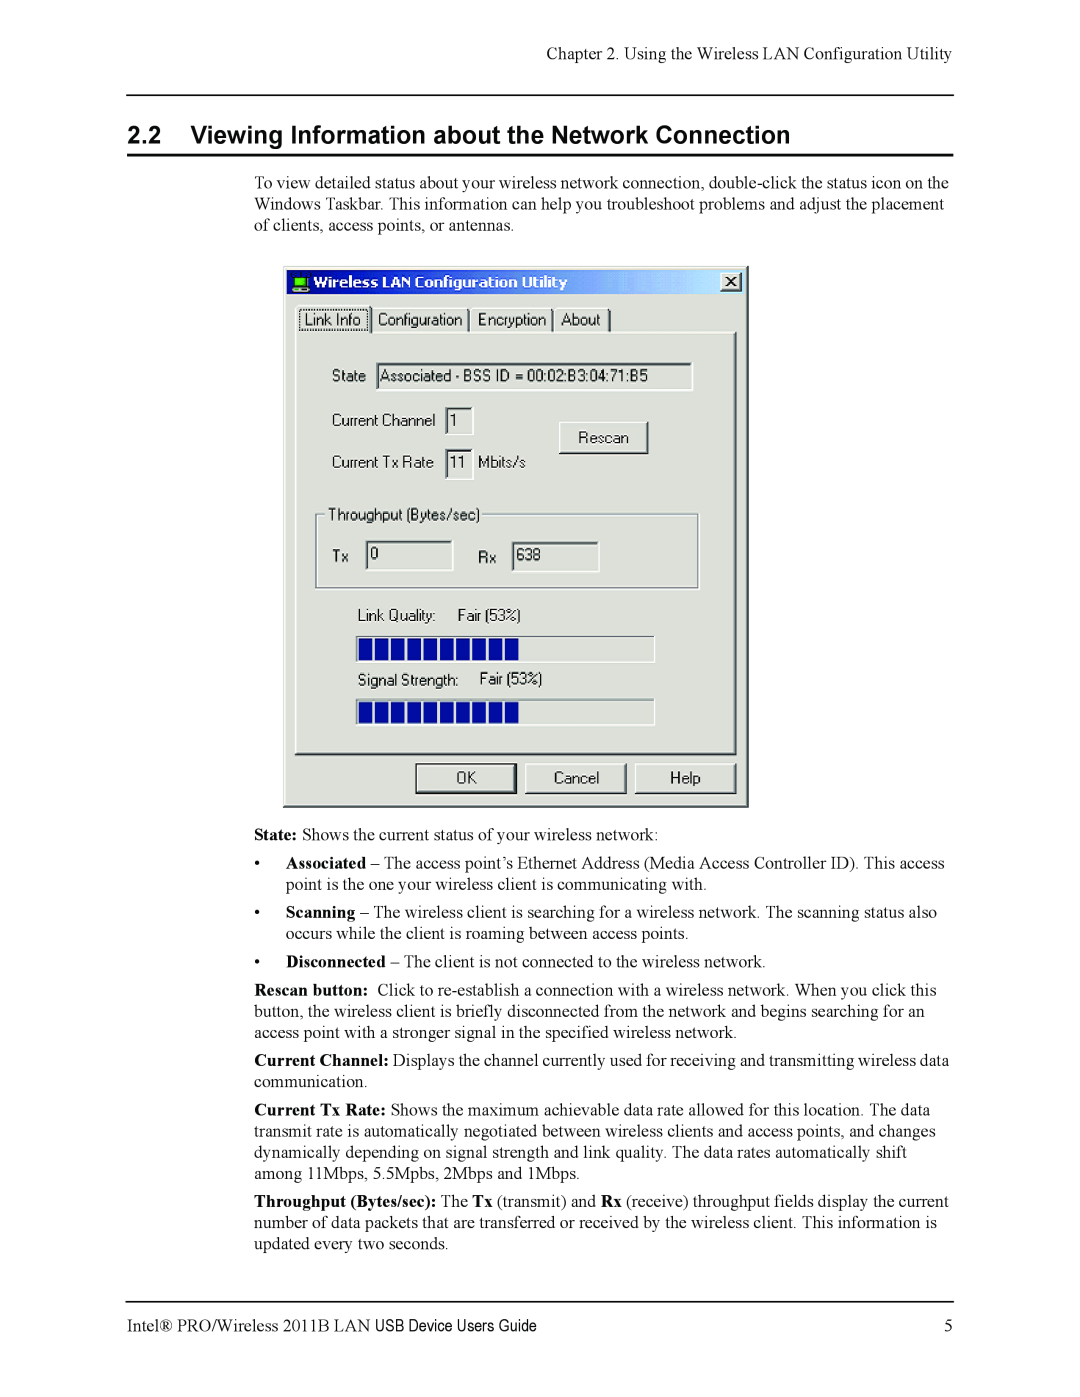 Intel 2011B manual Using the Wireless LAN Configuration Utility 